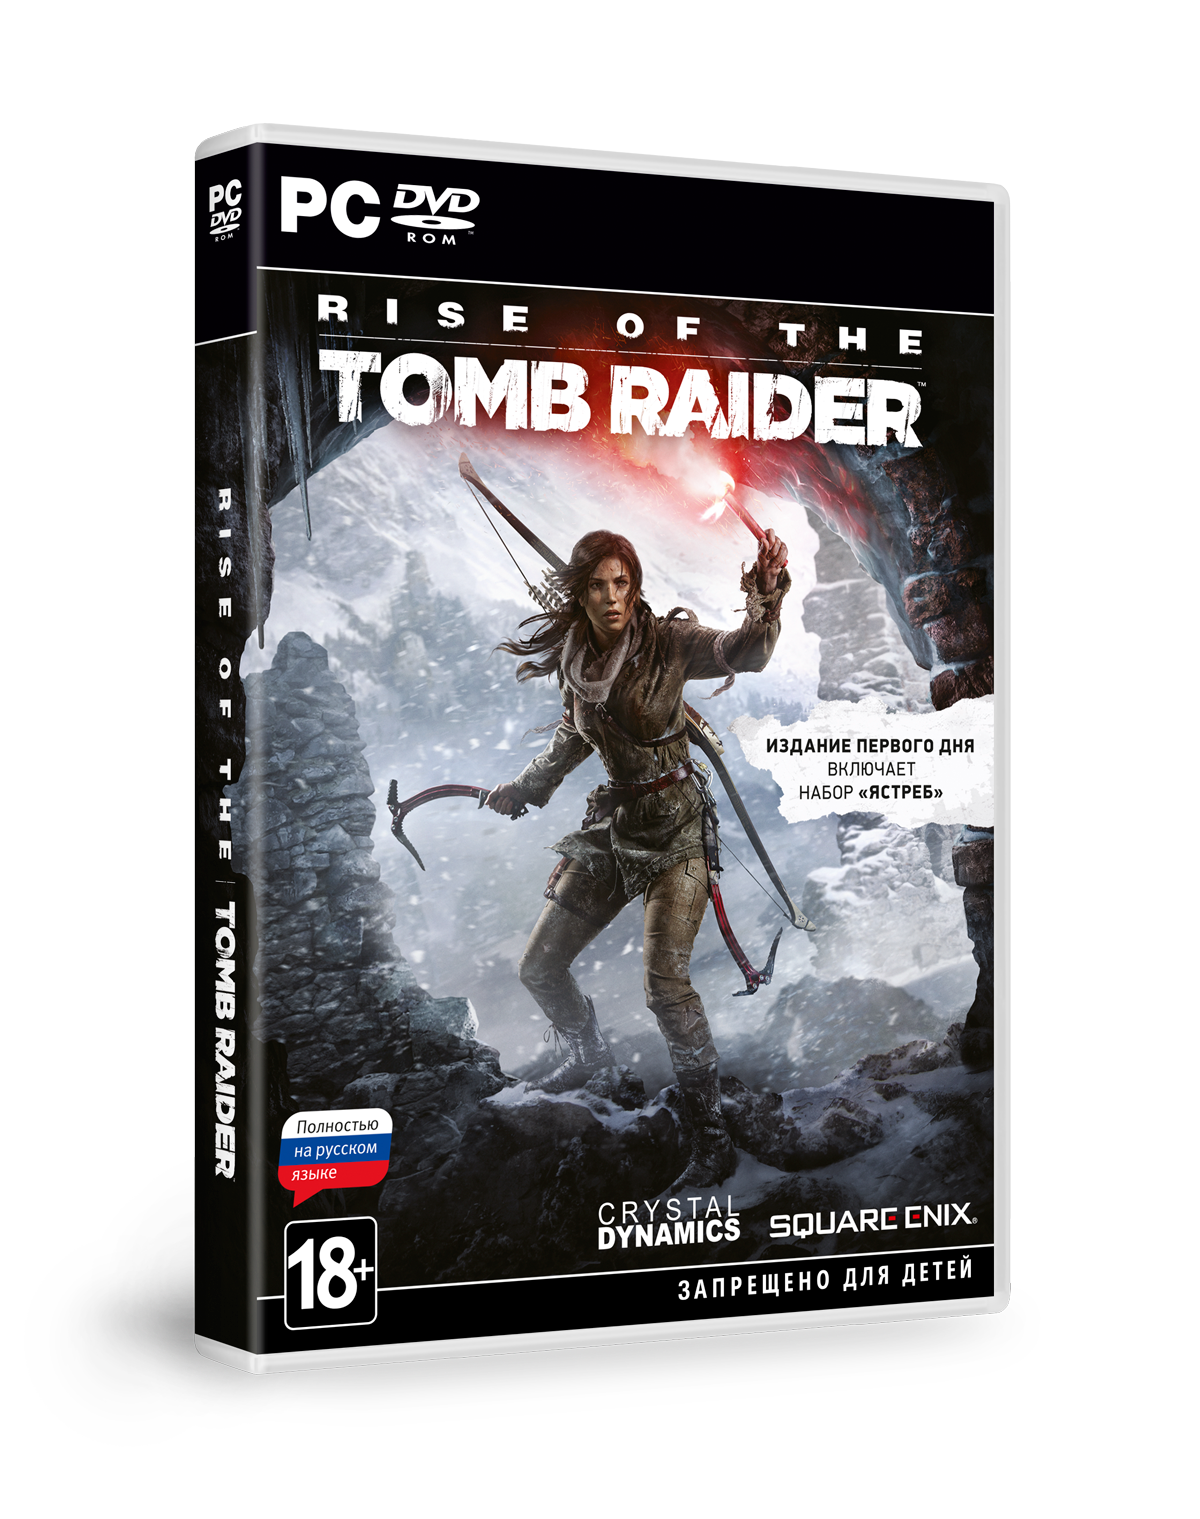 Игра Rise of the Tomb Raider вышла для для PC 